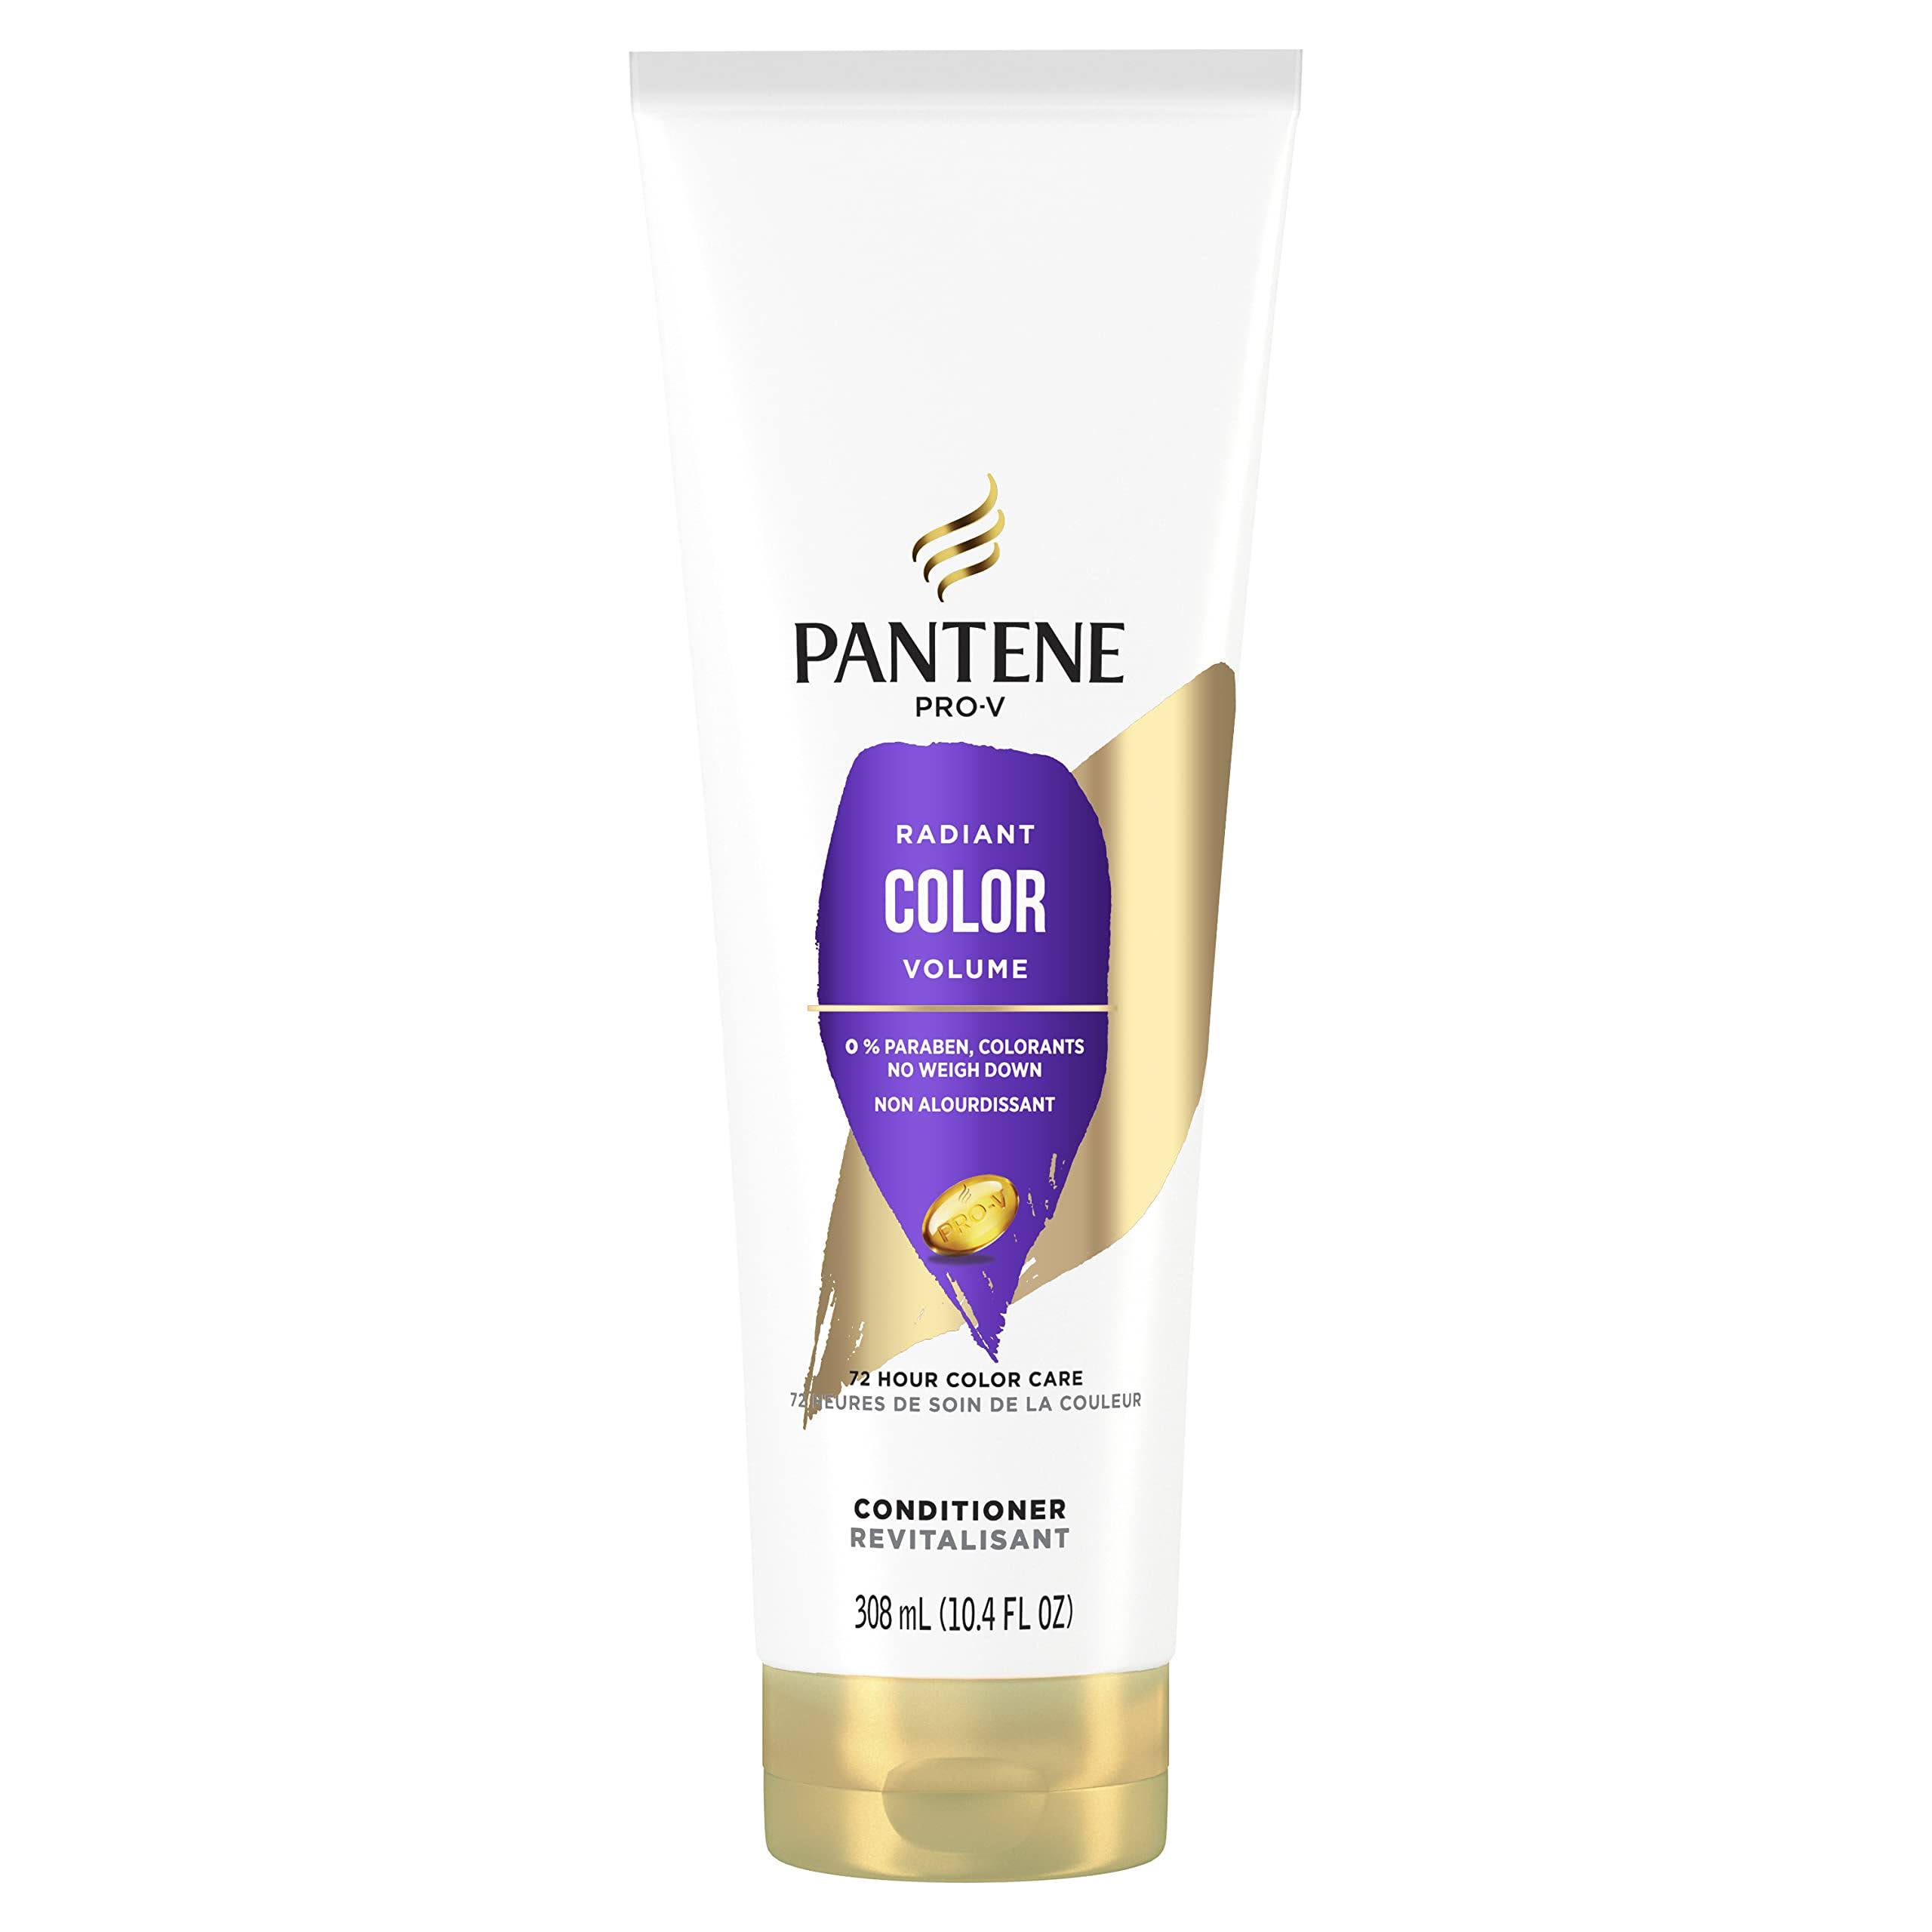 Pantene Radiant Color Volume Conditioner